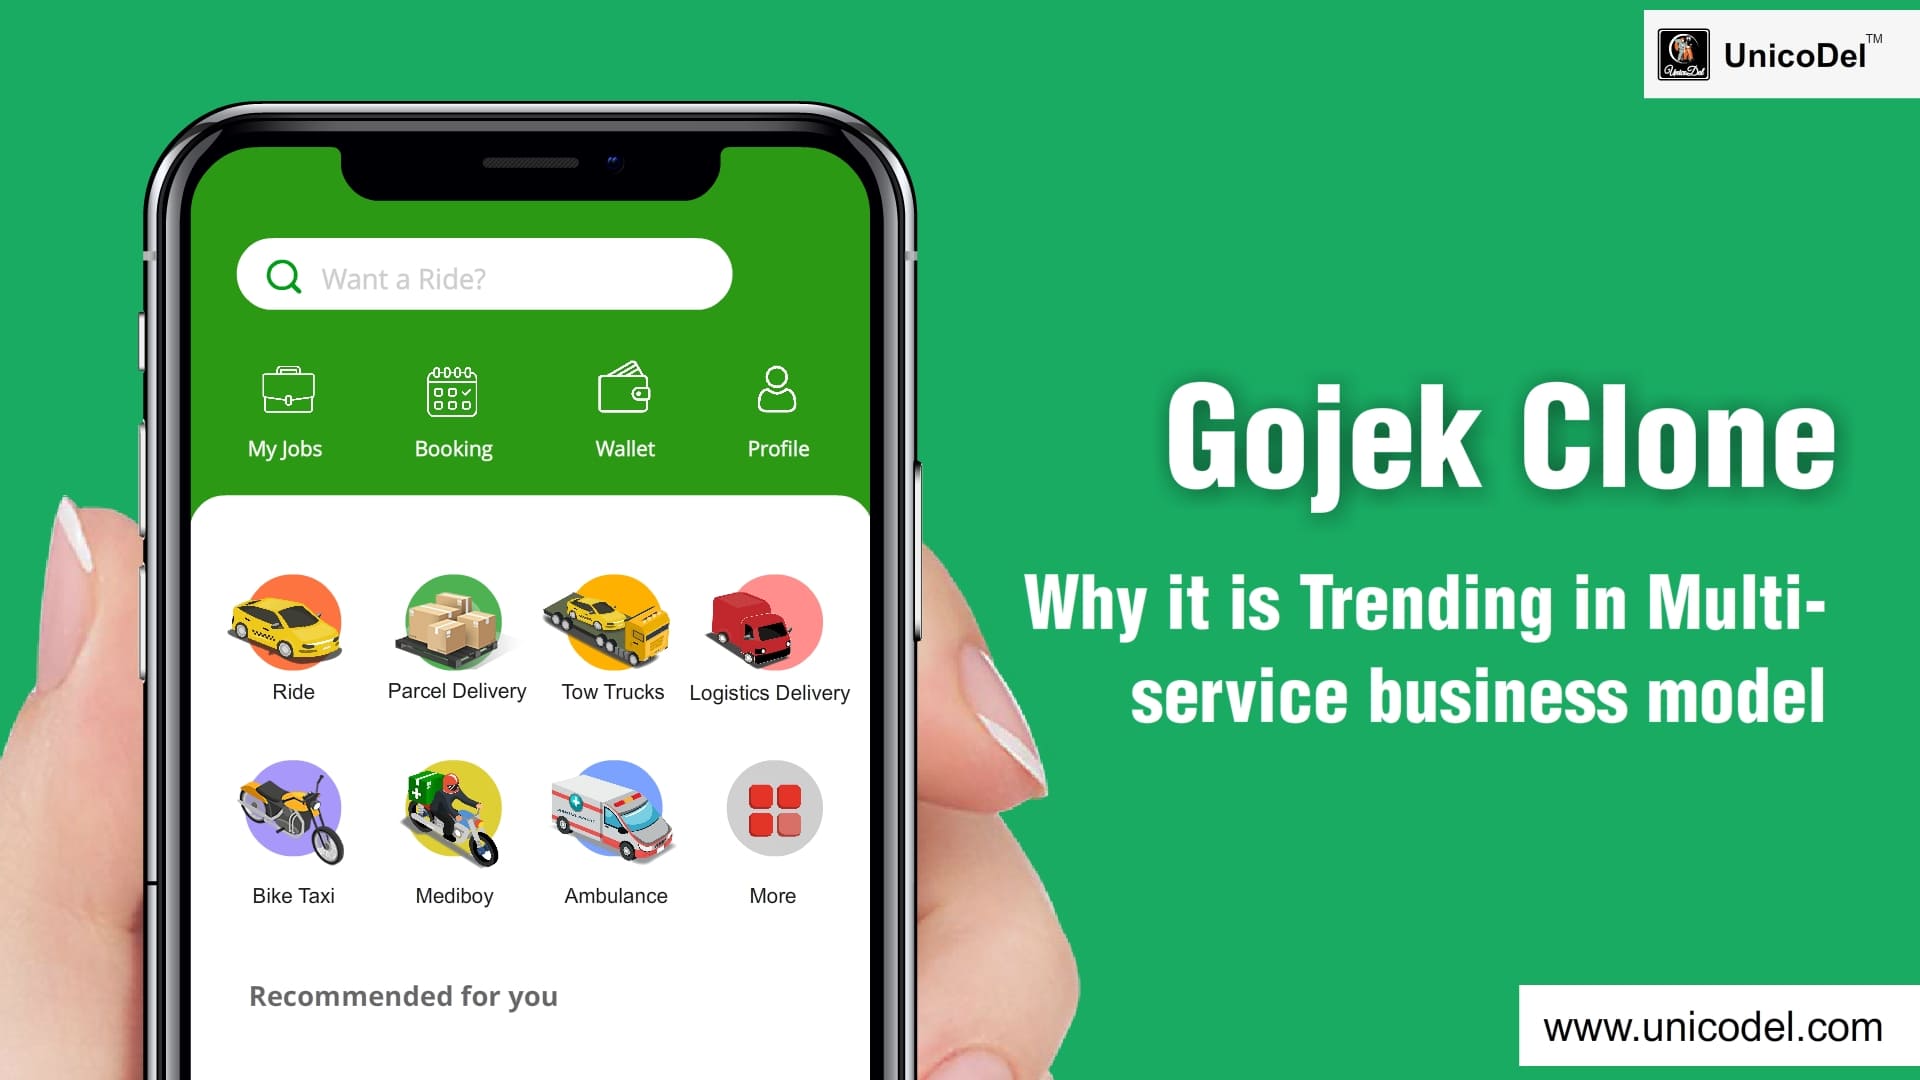 Gojek Clone – Why It Is Trending in Multi-Service Business Model